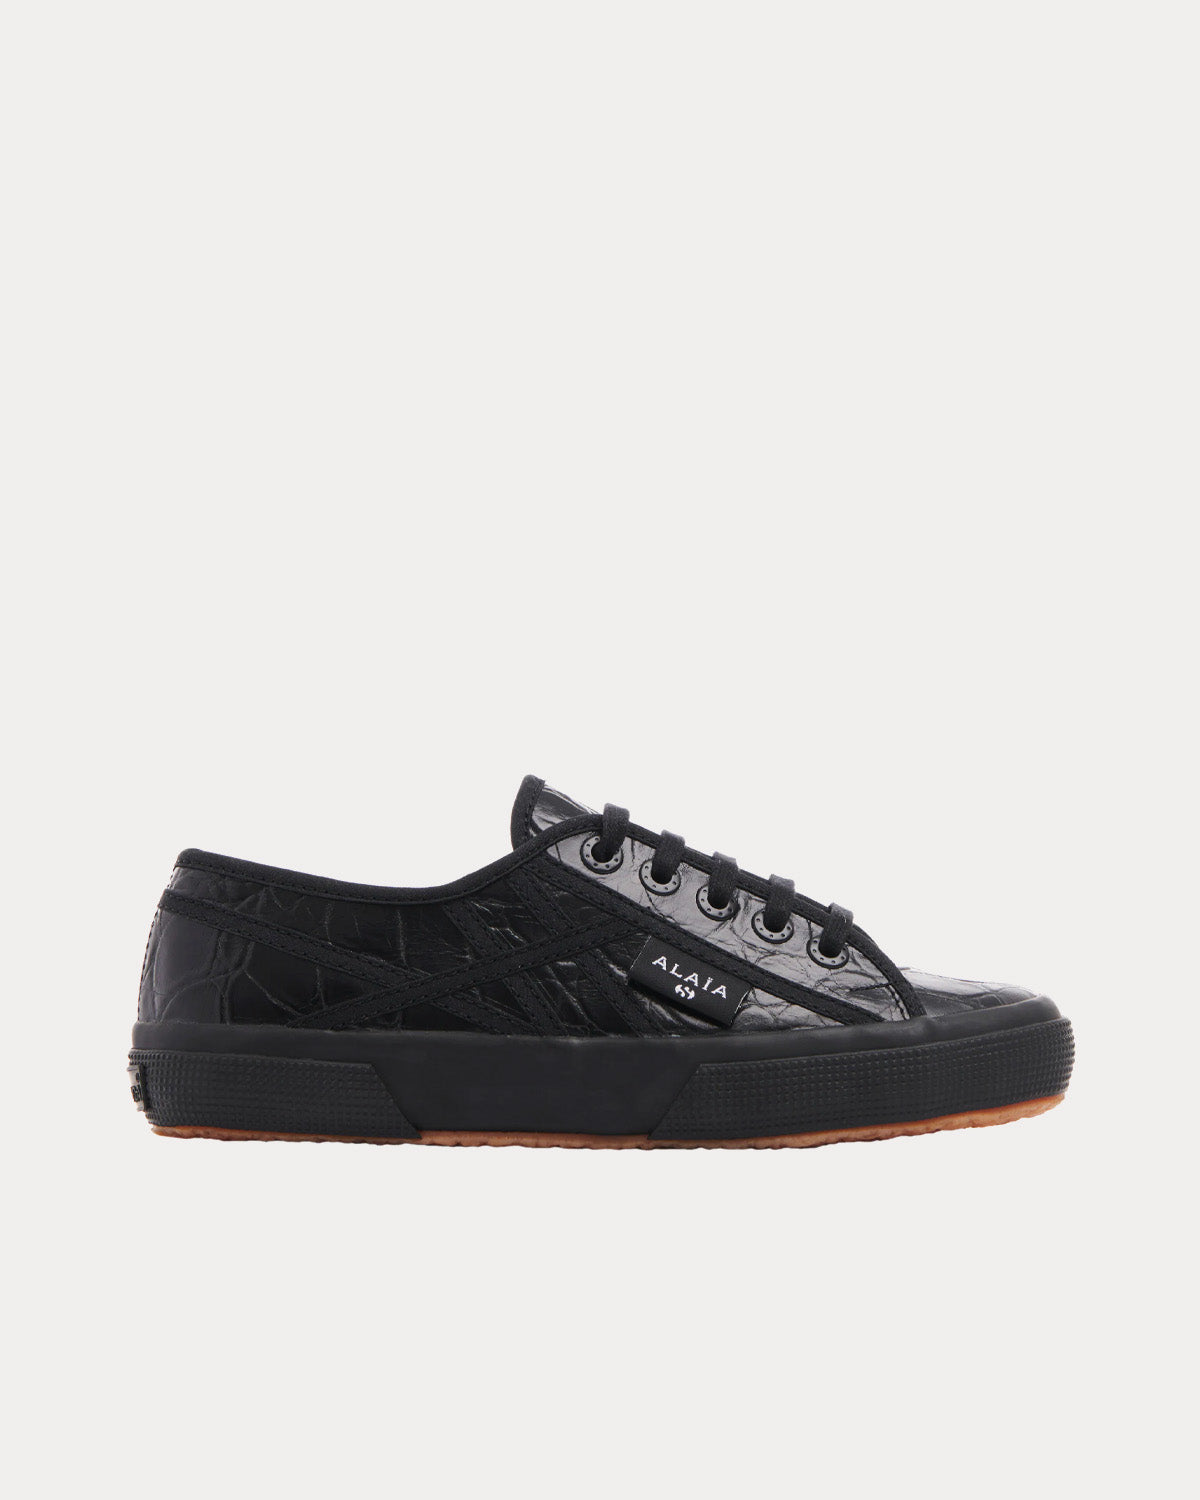 Alaïa x Superga - Leather Black Low Top Sneakers